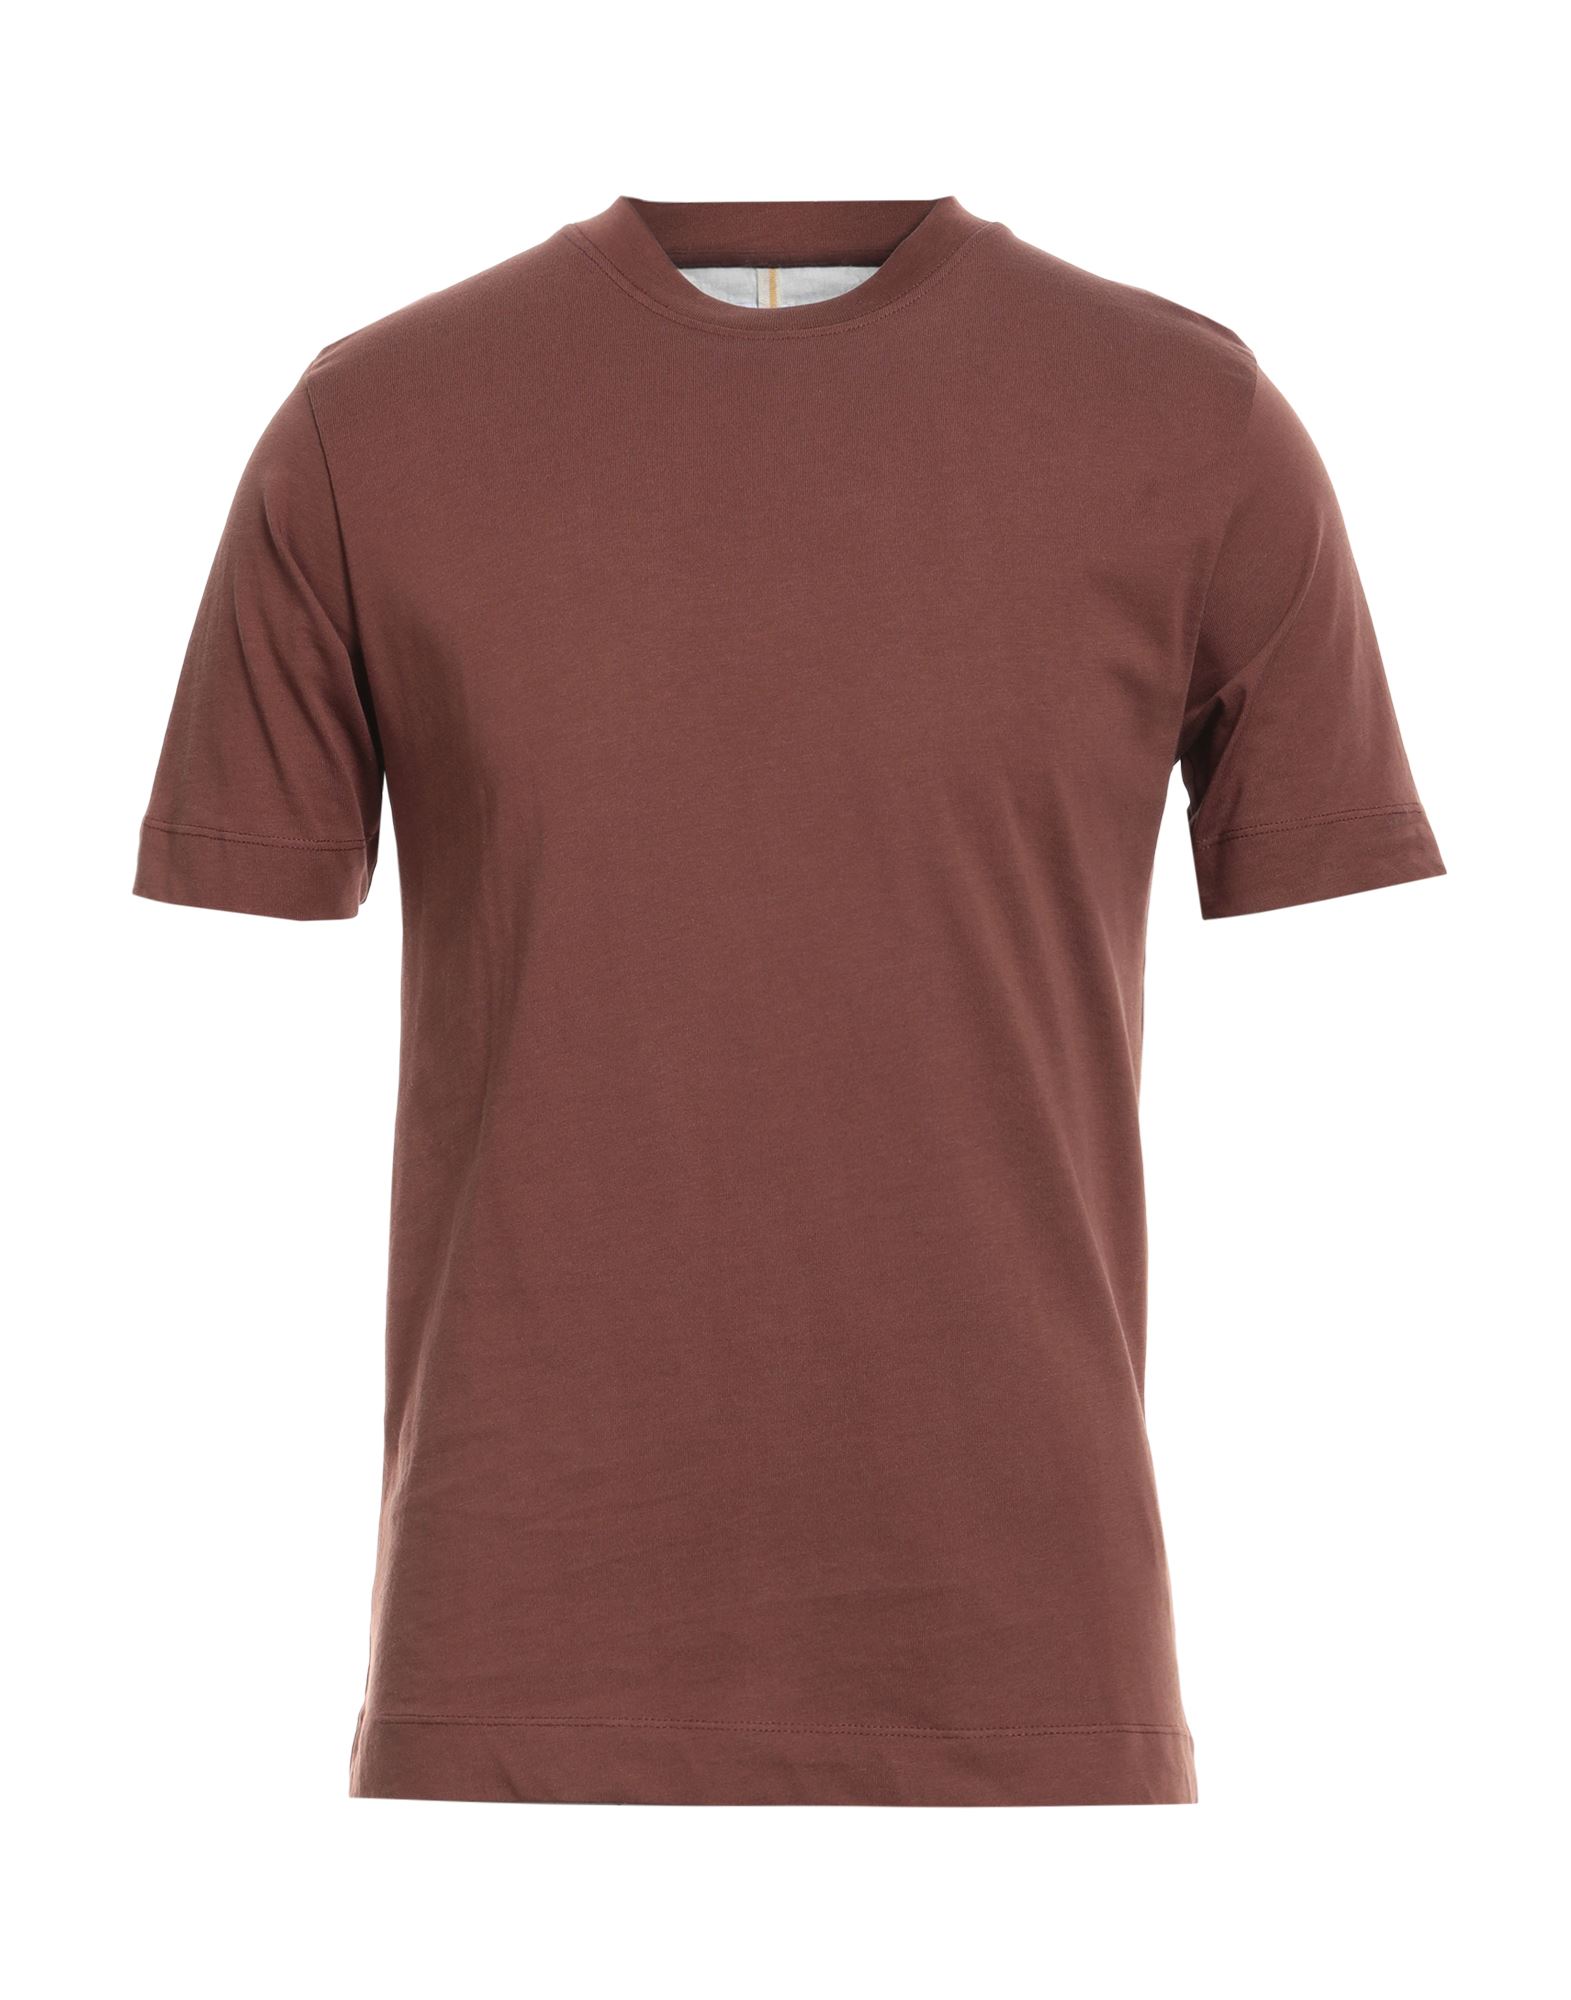 Gazzarrini T-shirts In Brown